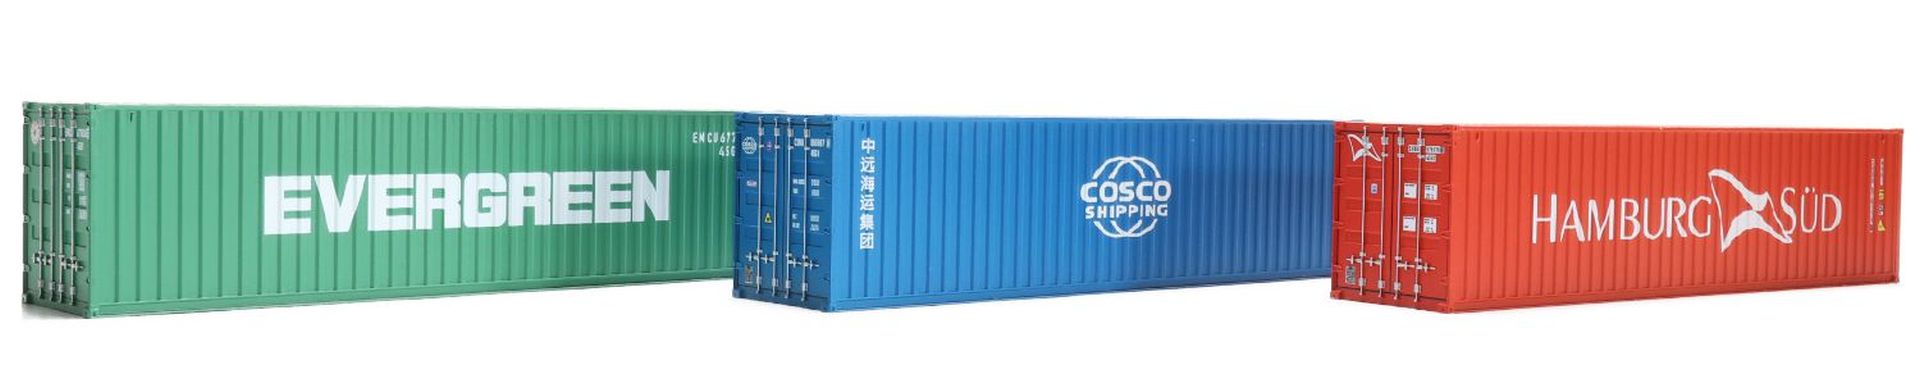 igra 98010061 - 3er Set Container 40', Evergreen, HASU, Cosco